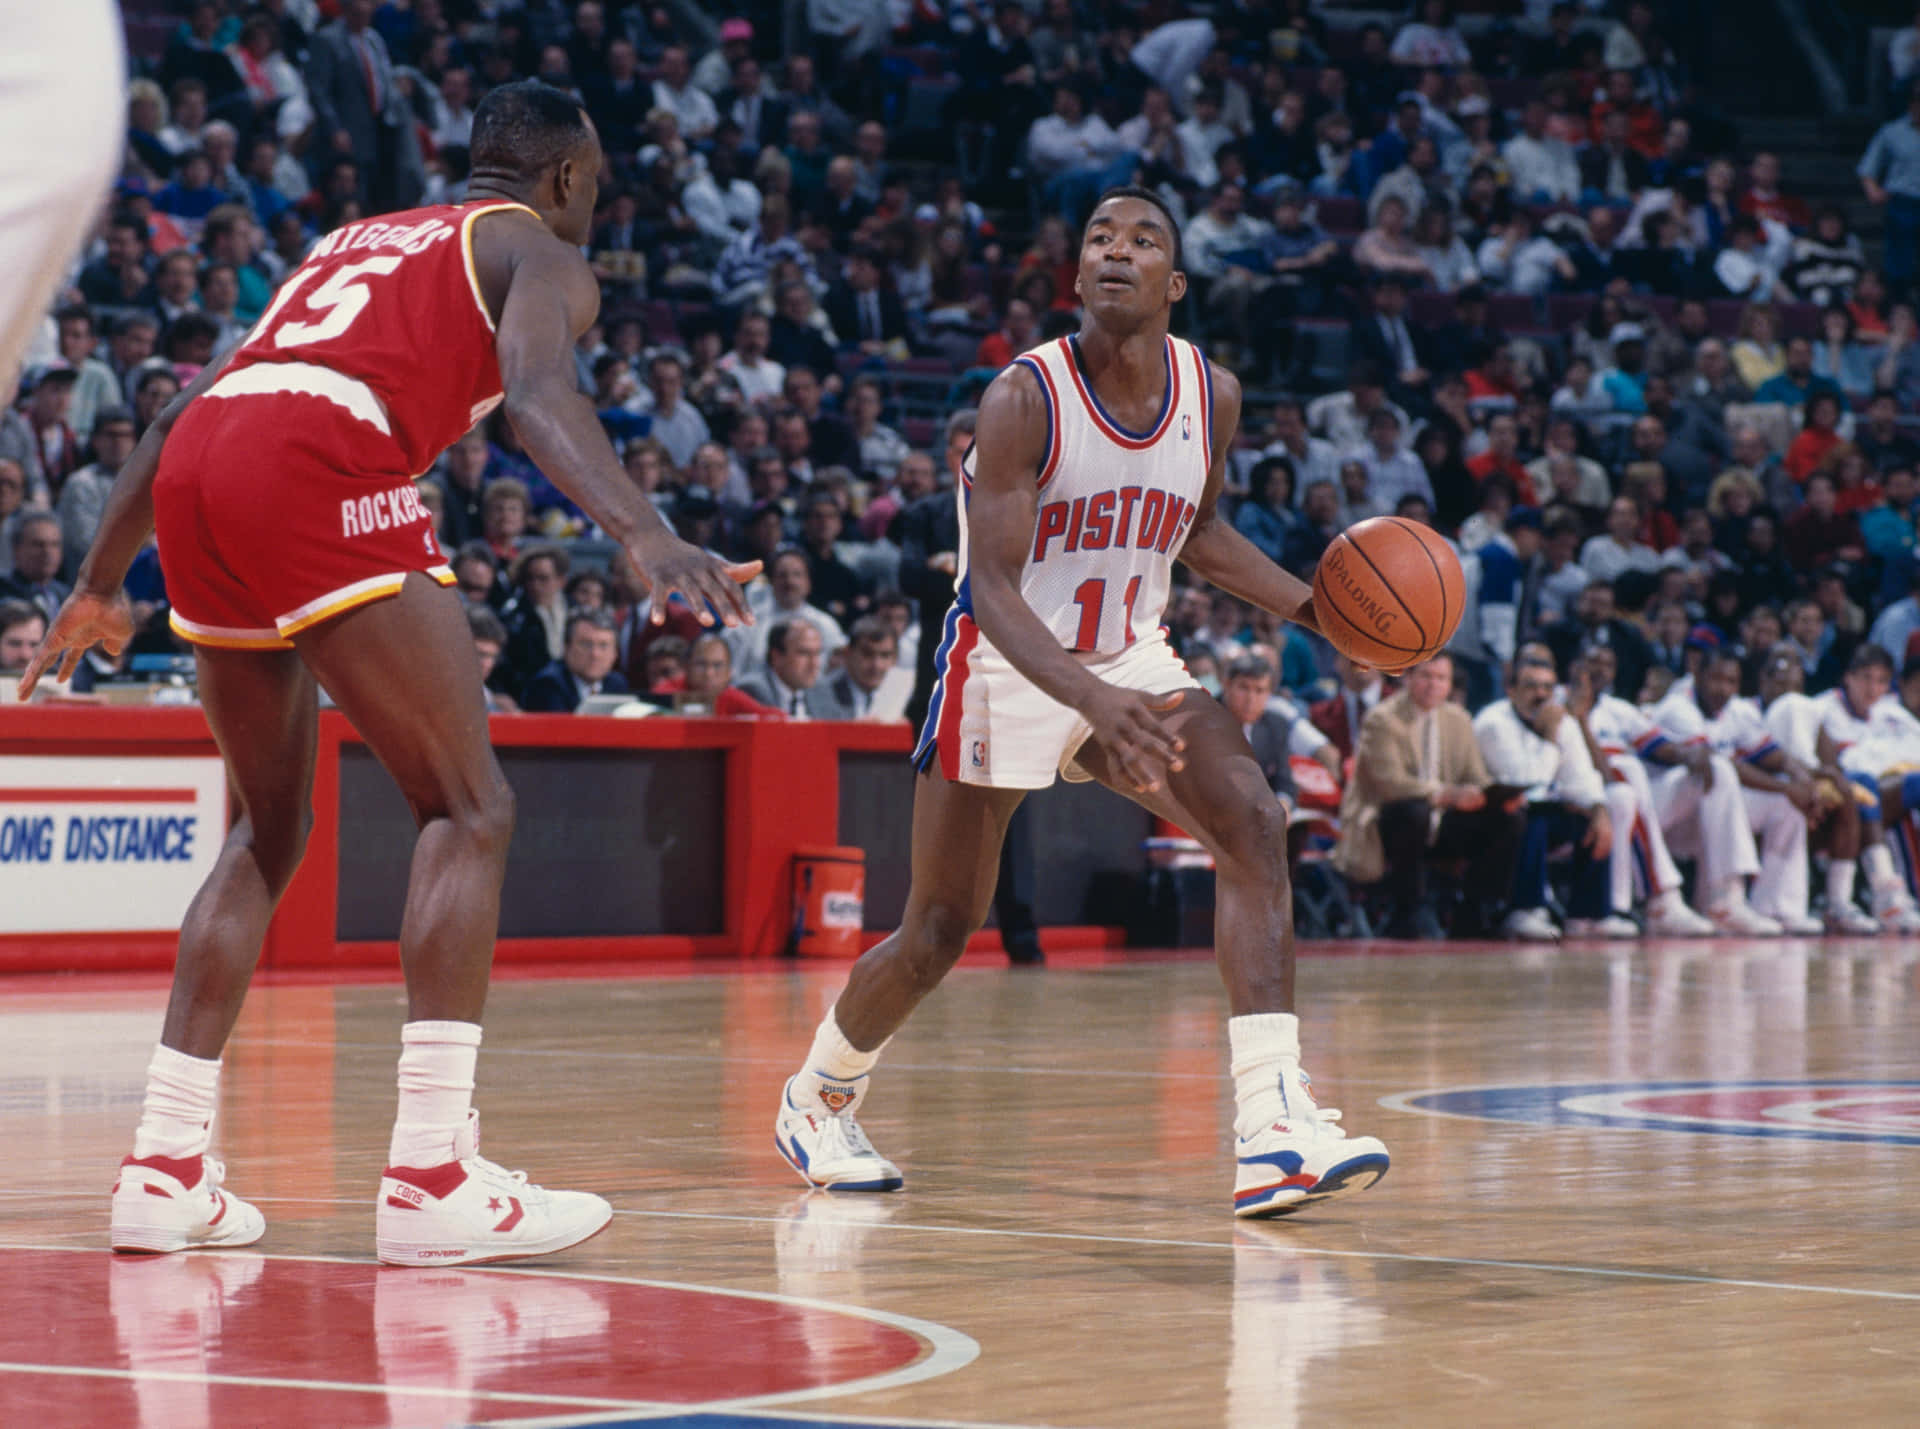 Isiahthomas Detroit Pistons Y Houston Rockets 1990 Nba. Fondo de pantalla